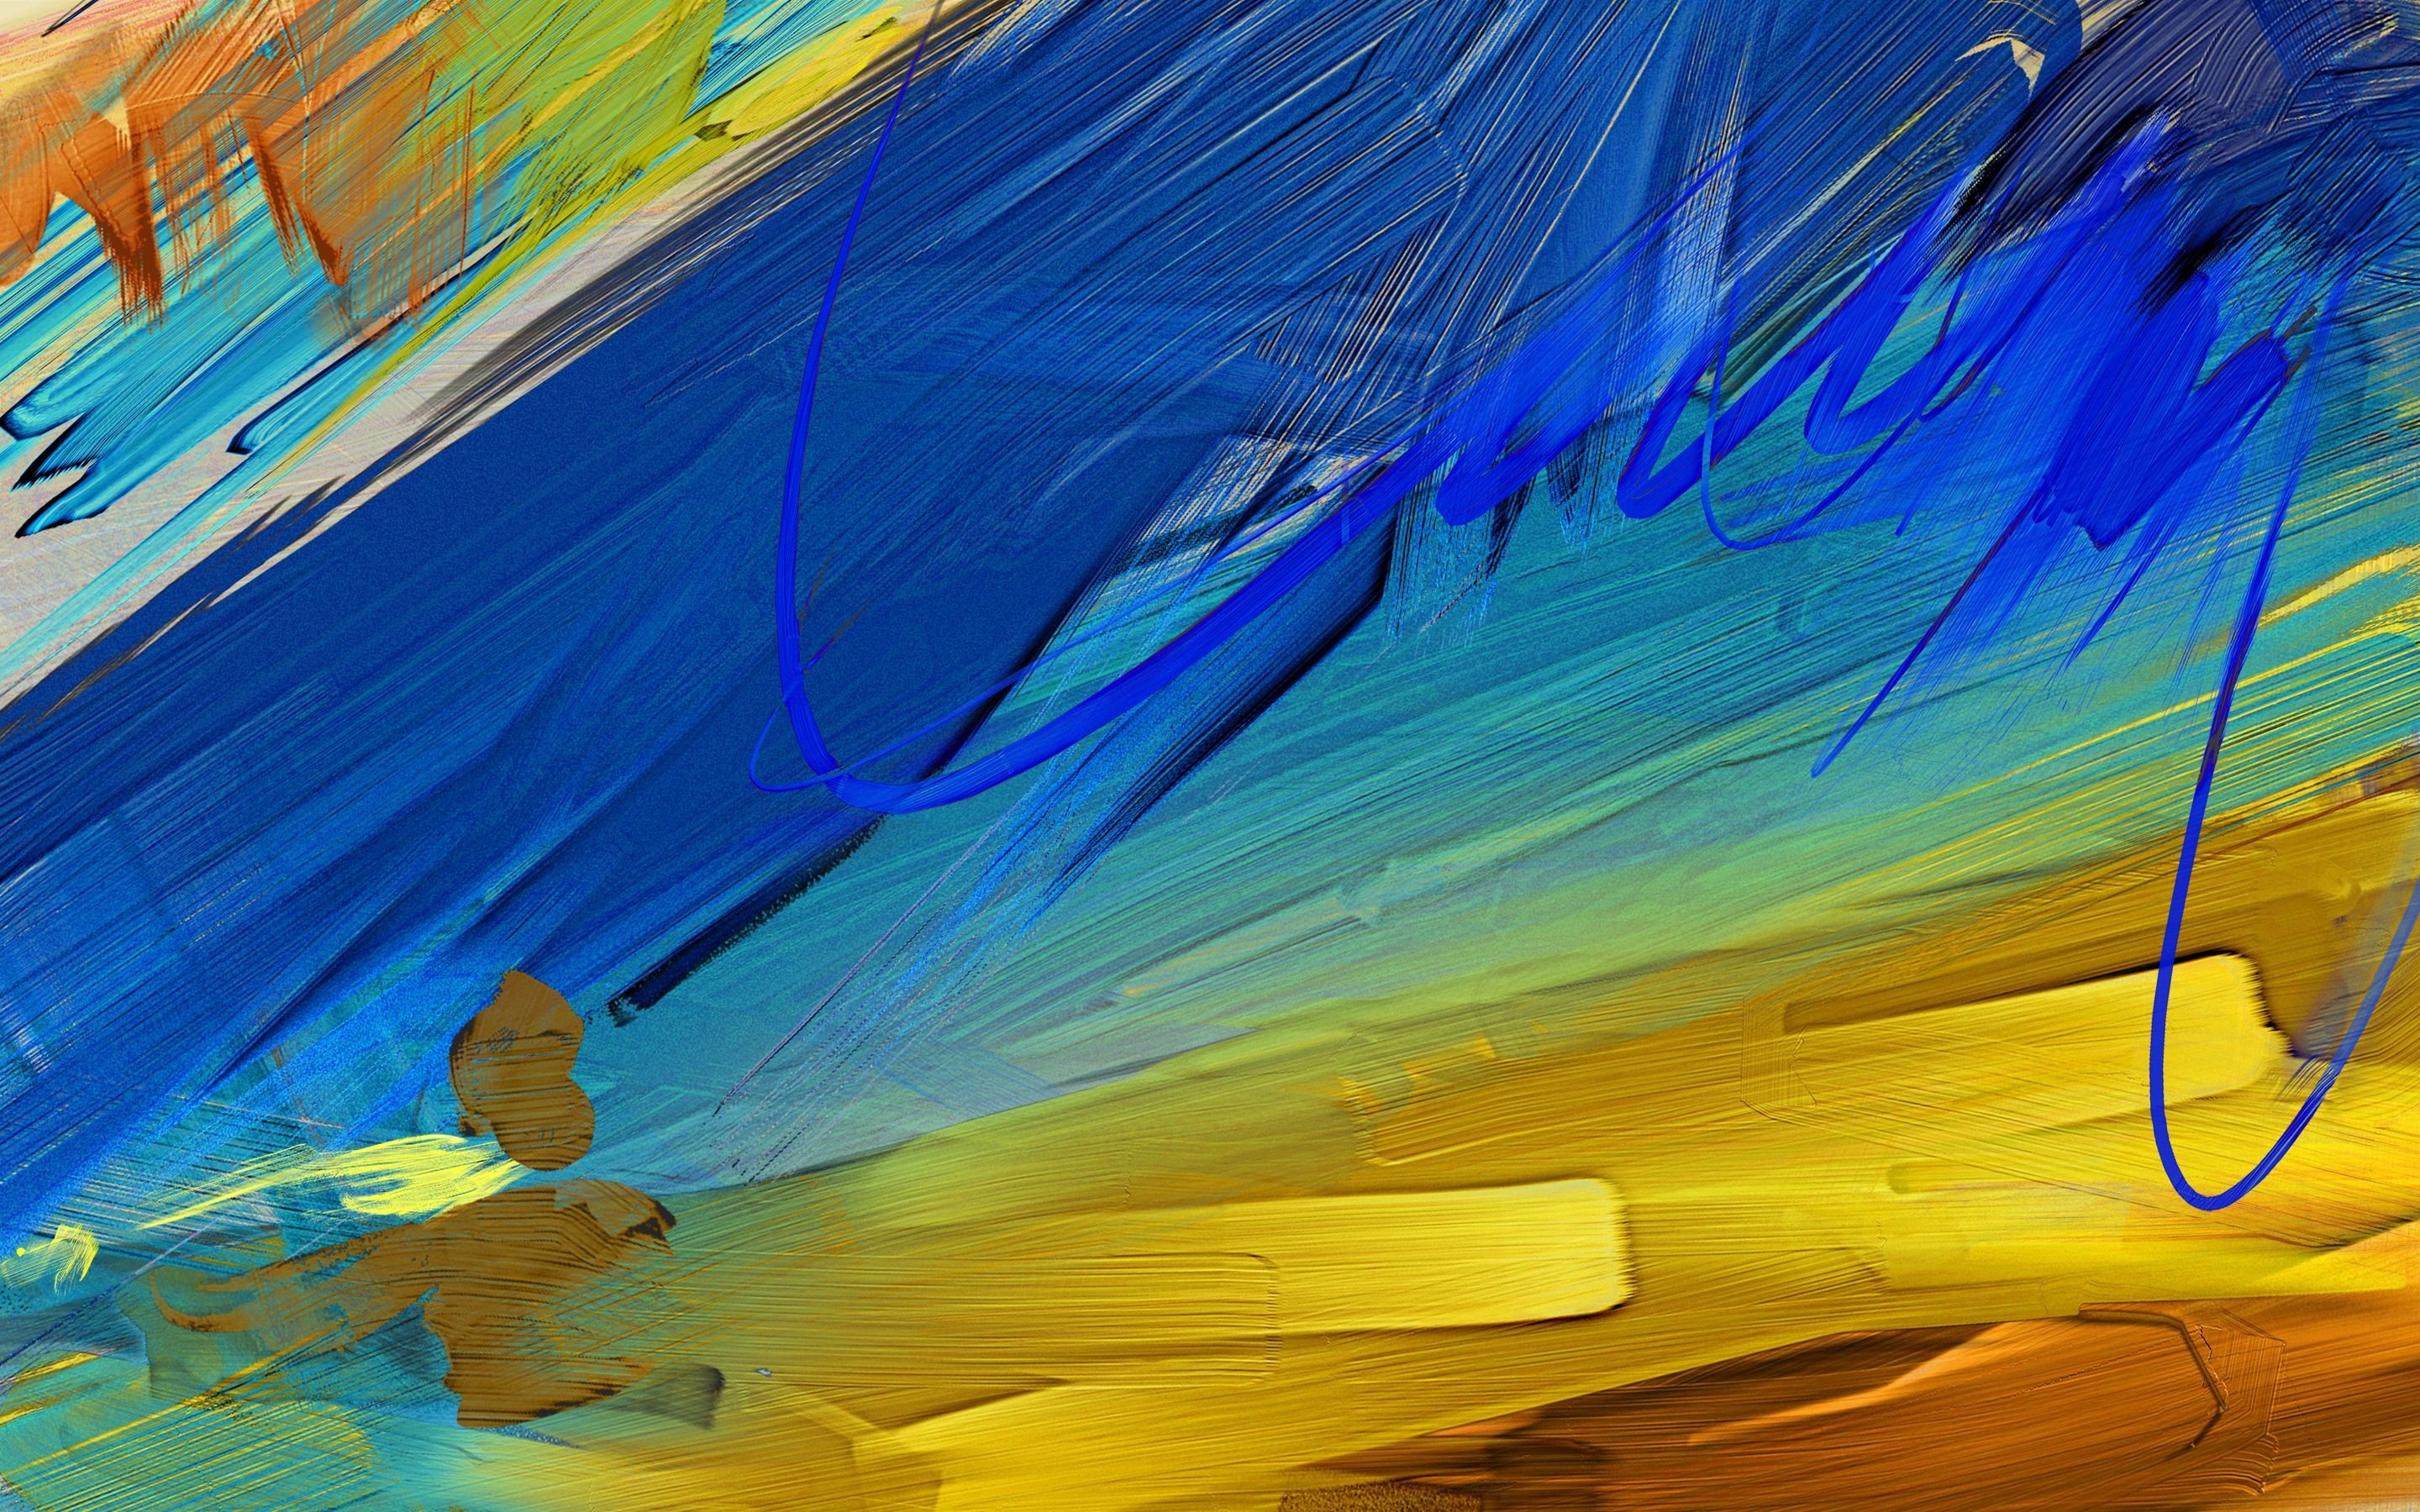 colors, strokes, textures, flowers, texture, paints, different, smears, oil High Definition image